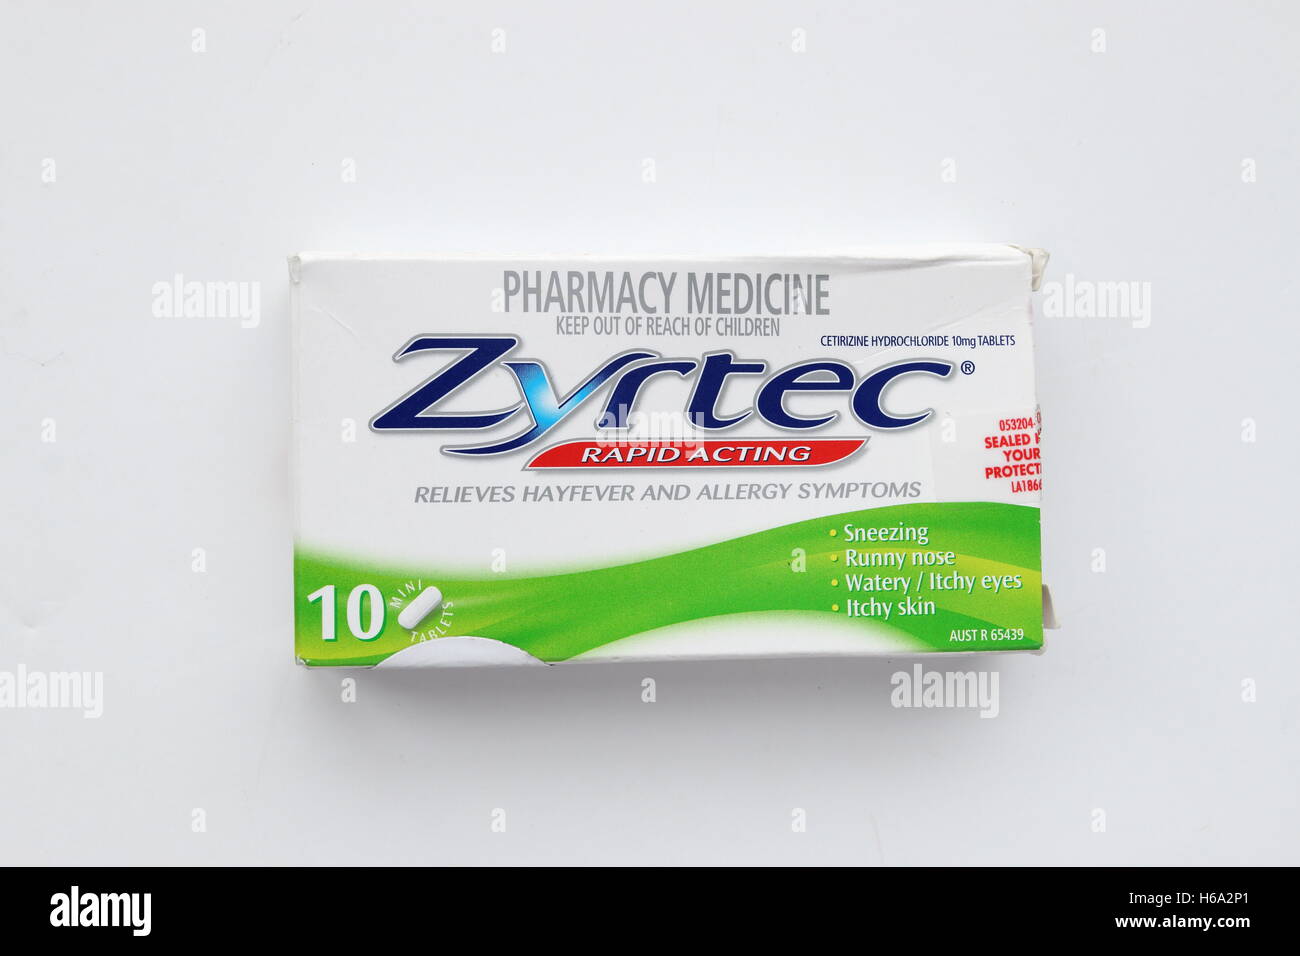 erythromycin 40 mg/ml / zinc acetate 12mg/ml lotion